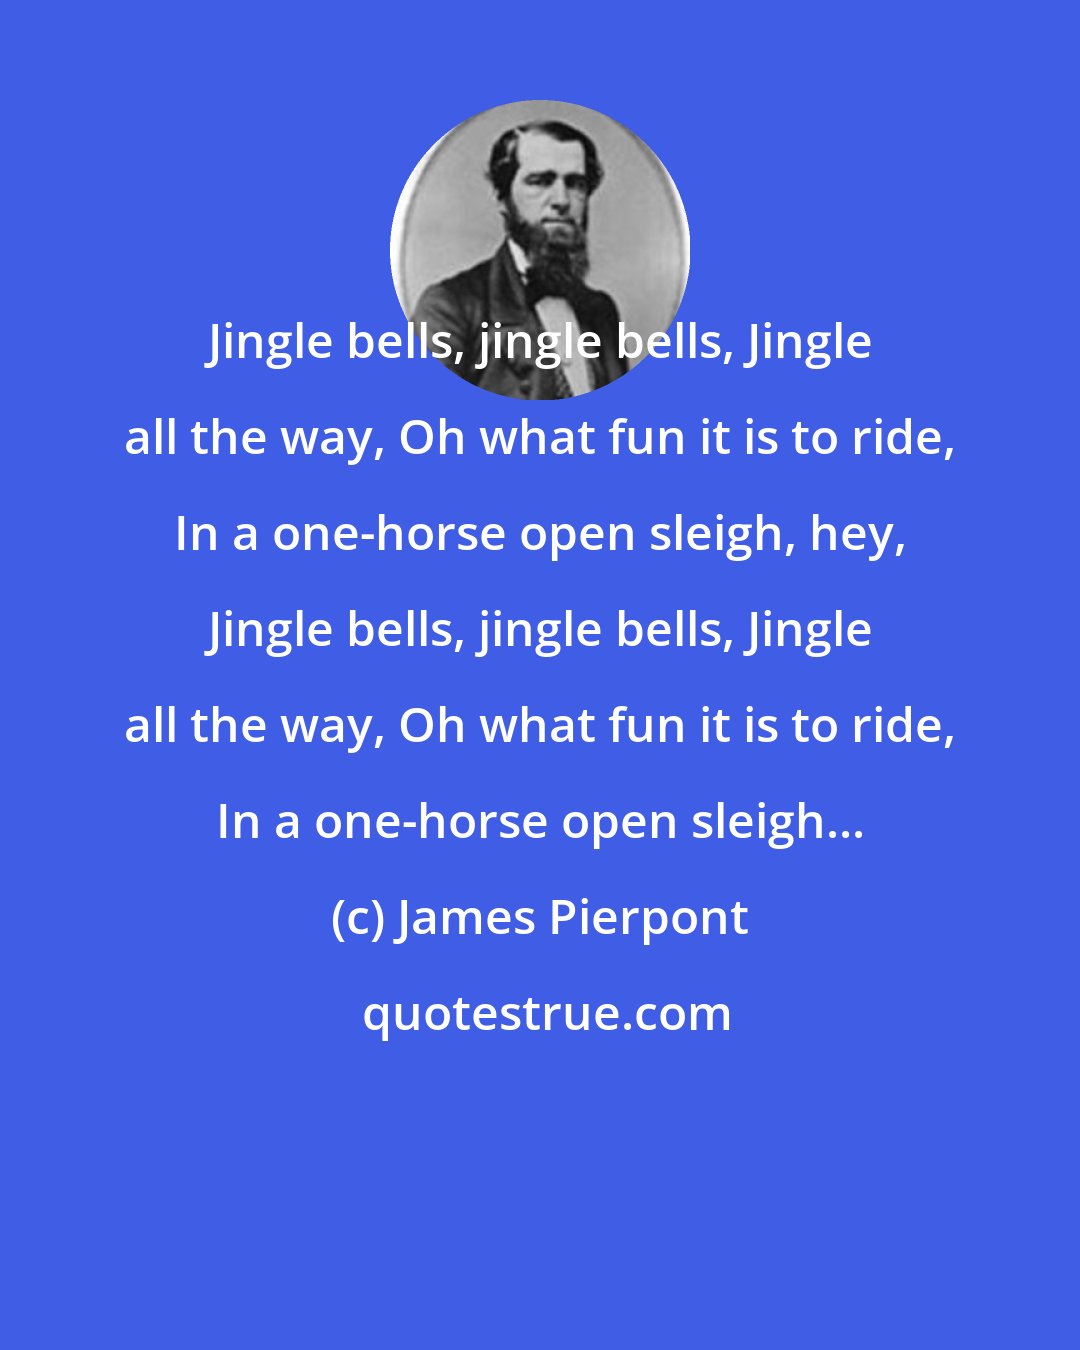 James Pierpont: Jingle bells, jingle bells, Jingle all the way, Oh what fun it is to ride, In a one-horse open sleigh, hey, Jingle bells, jingle bells, Jingle all the way, Oh what fun it is to ride, In a one-horse open sleigh...